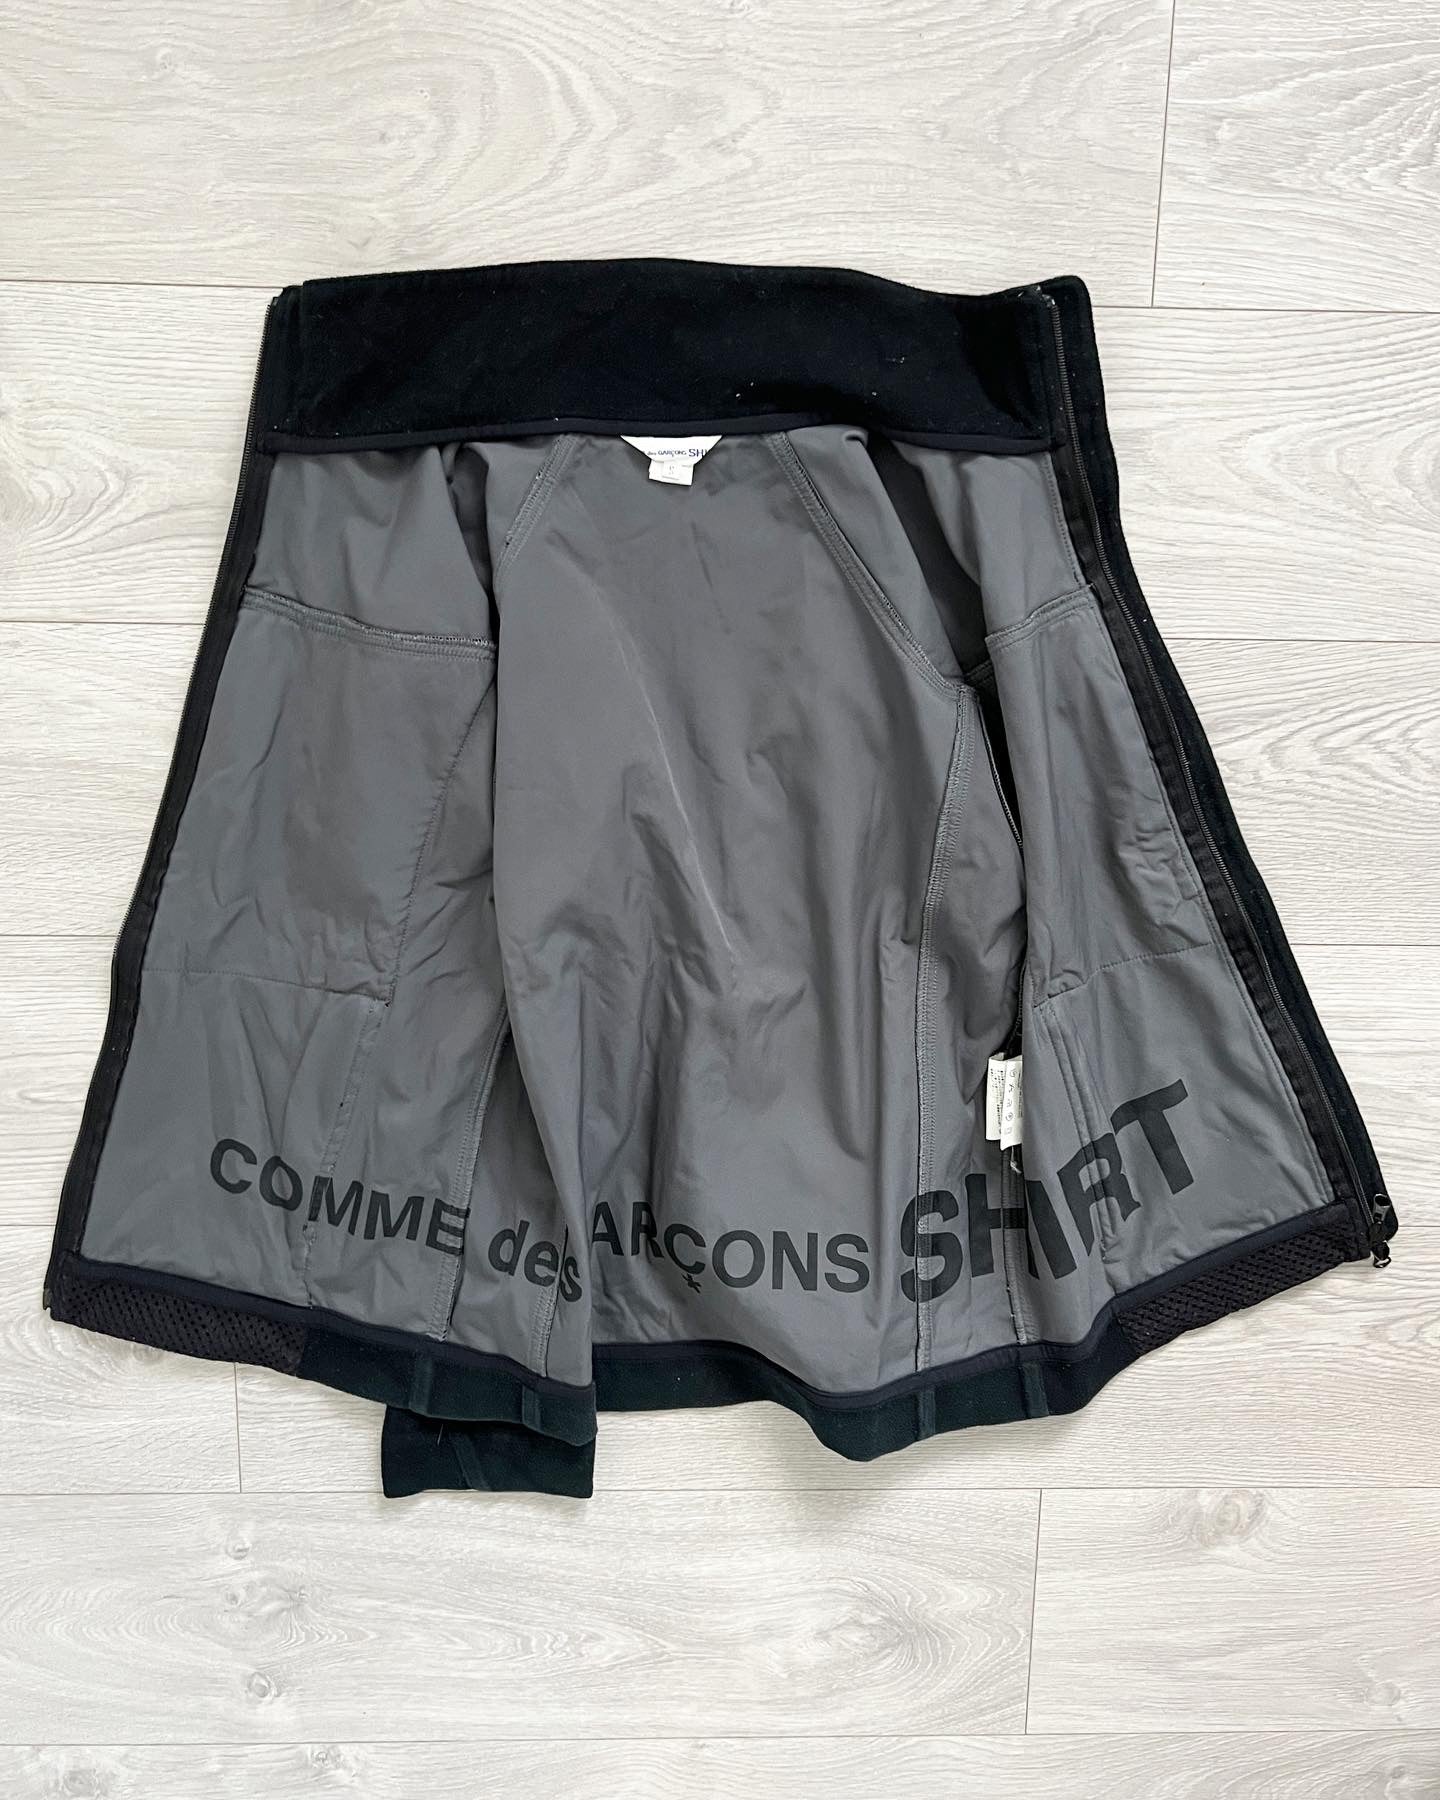 Comme Des Garcons Shirt 2009 Technical Mesh Pocket Jacket - Size S